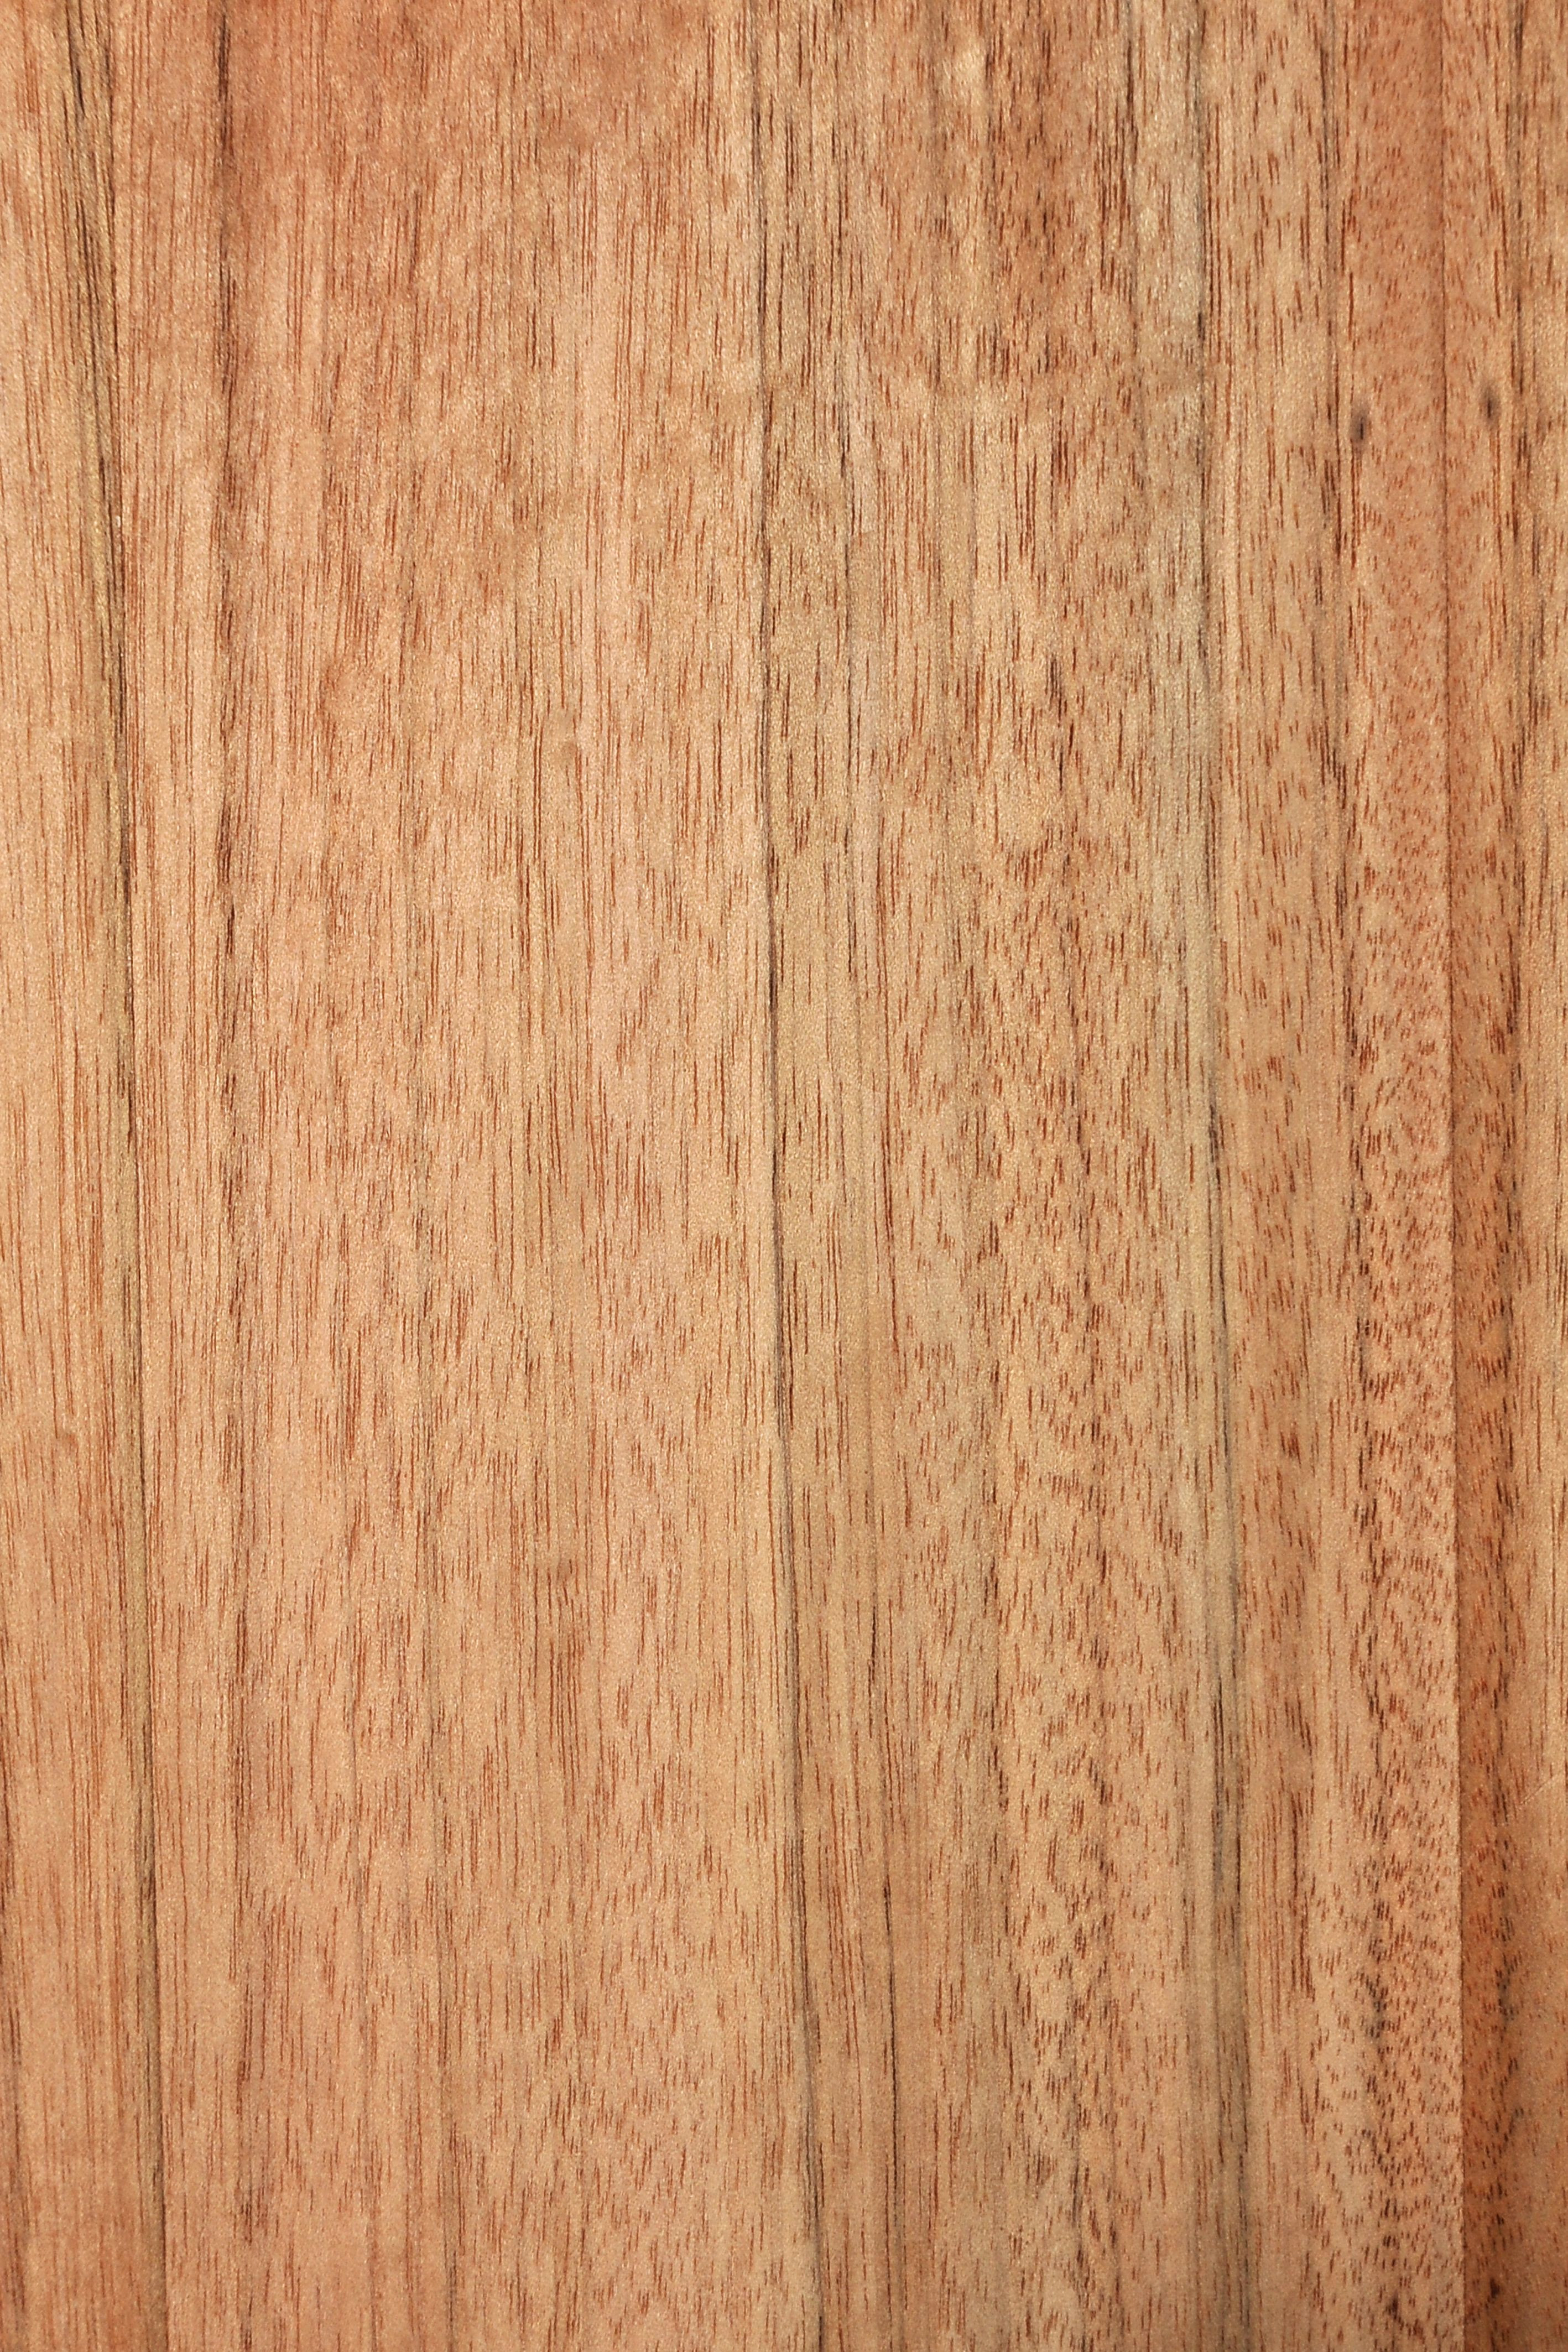 30 Trendy Queensland Hardwood Flooring 2024 free download queensland hardwood flooring of new guinea walnut timber veneer colour range pinterest ranges throughout new guinea walnut timber veneer colour range pinterest ranges